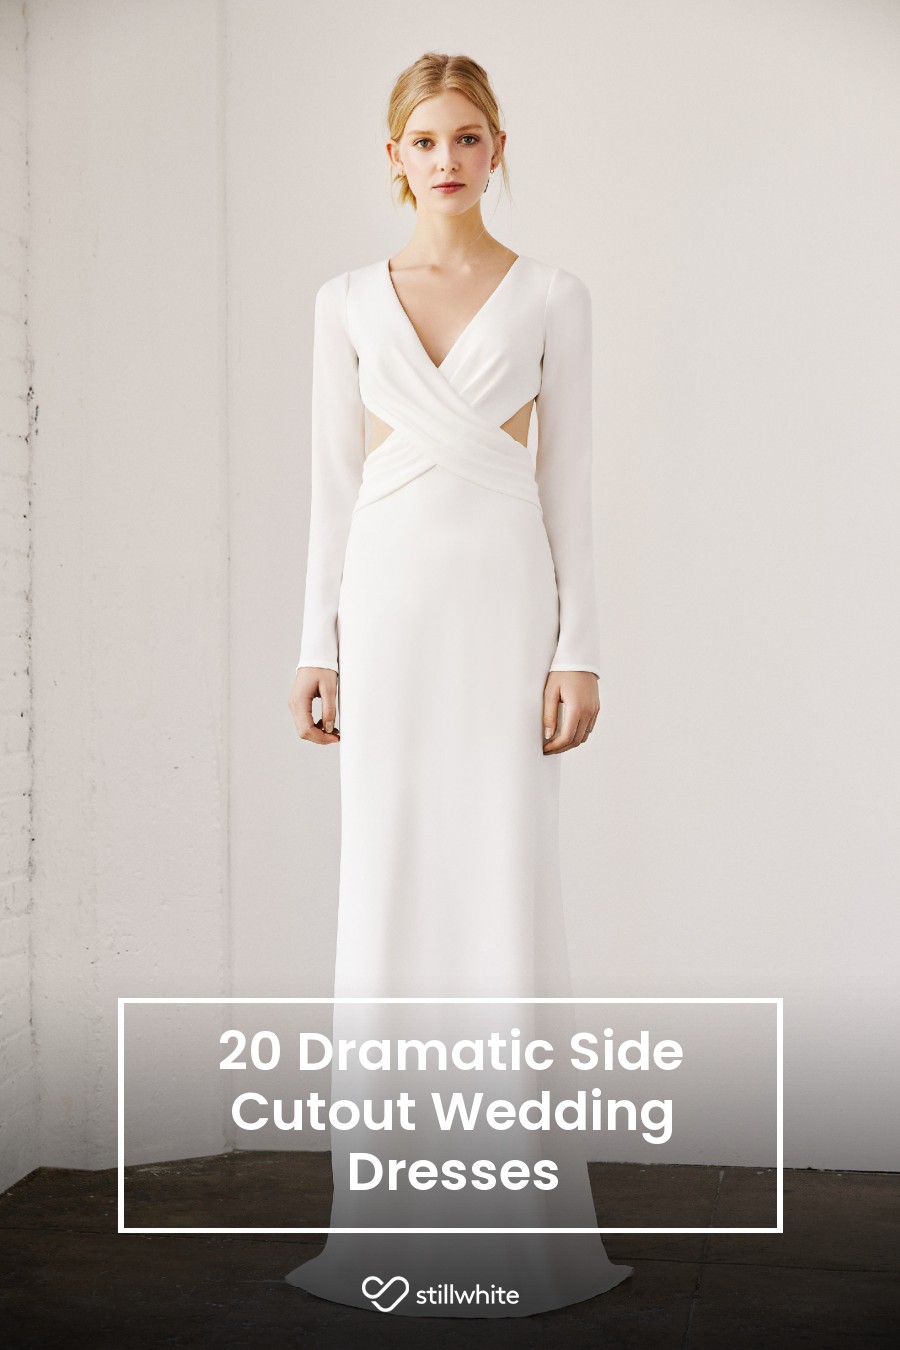 20 Dramatic Side Cutout Wedding Dresses – Stillwhite Blog